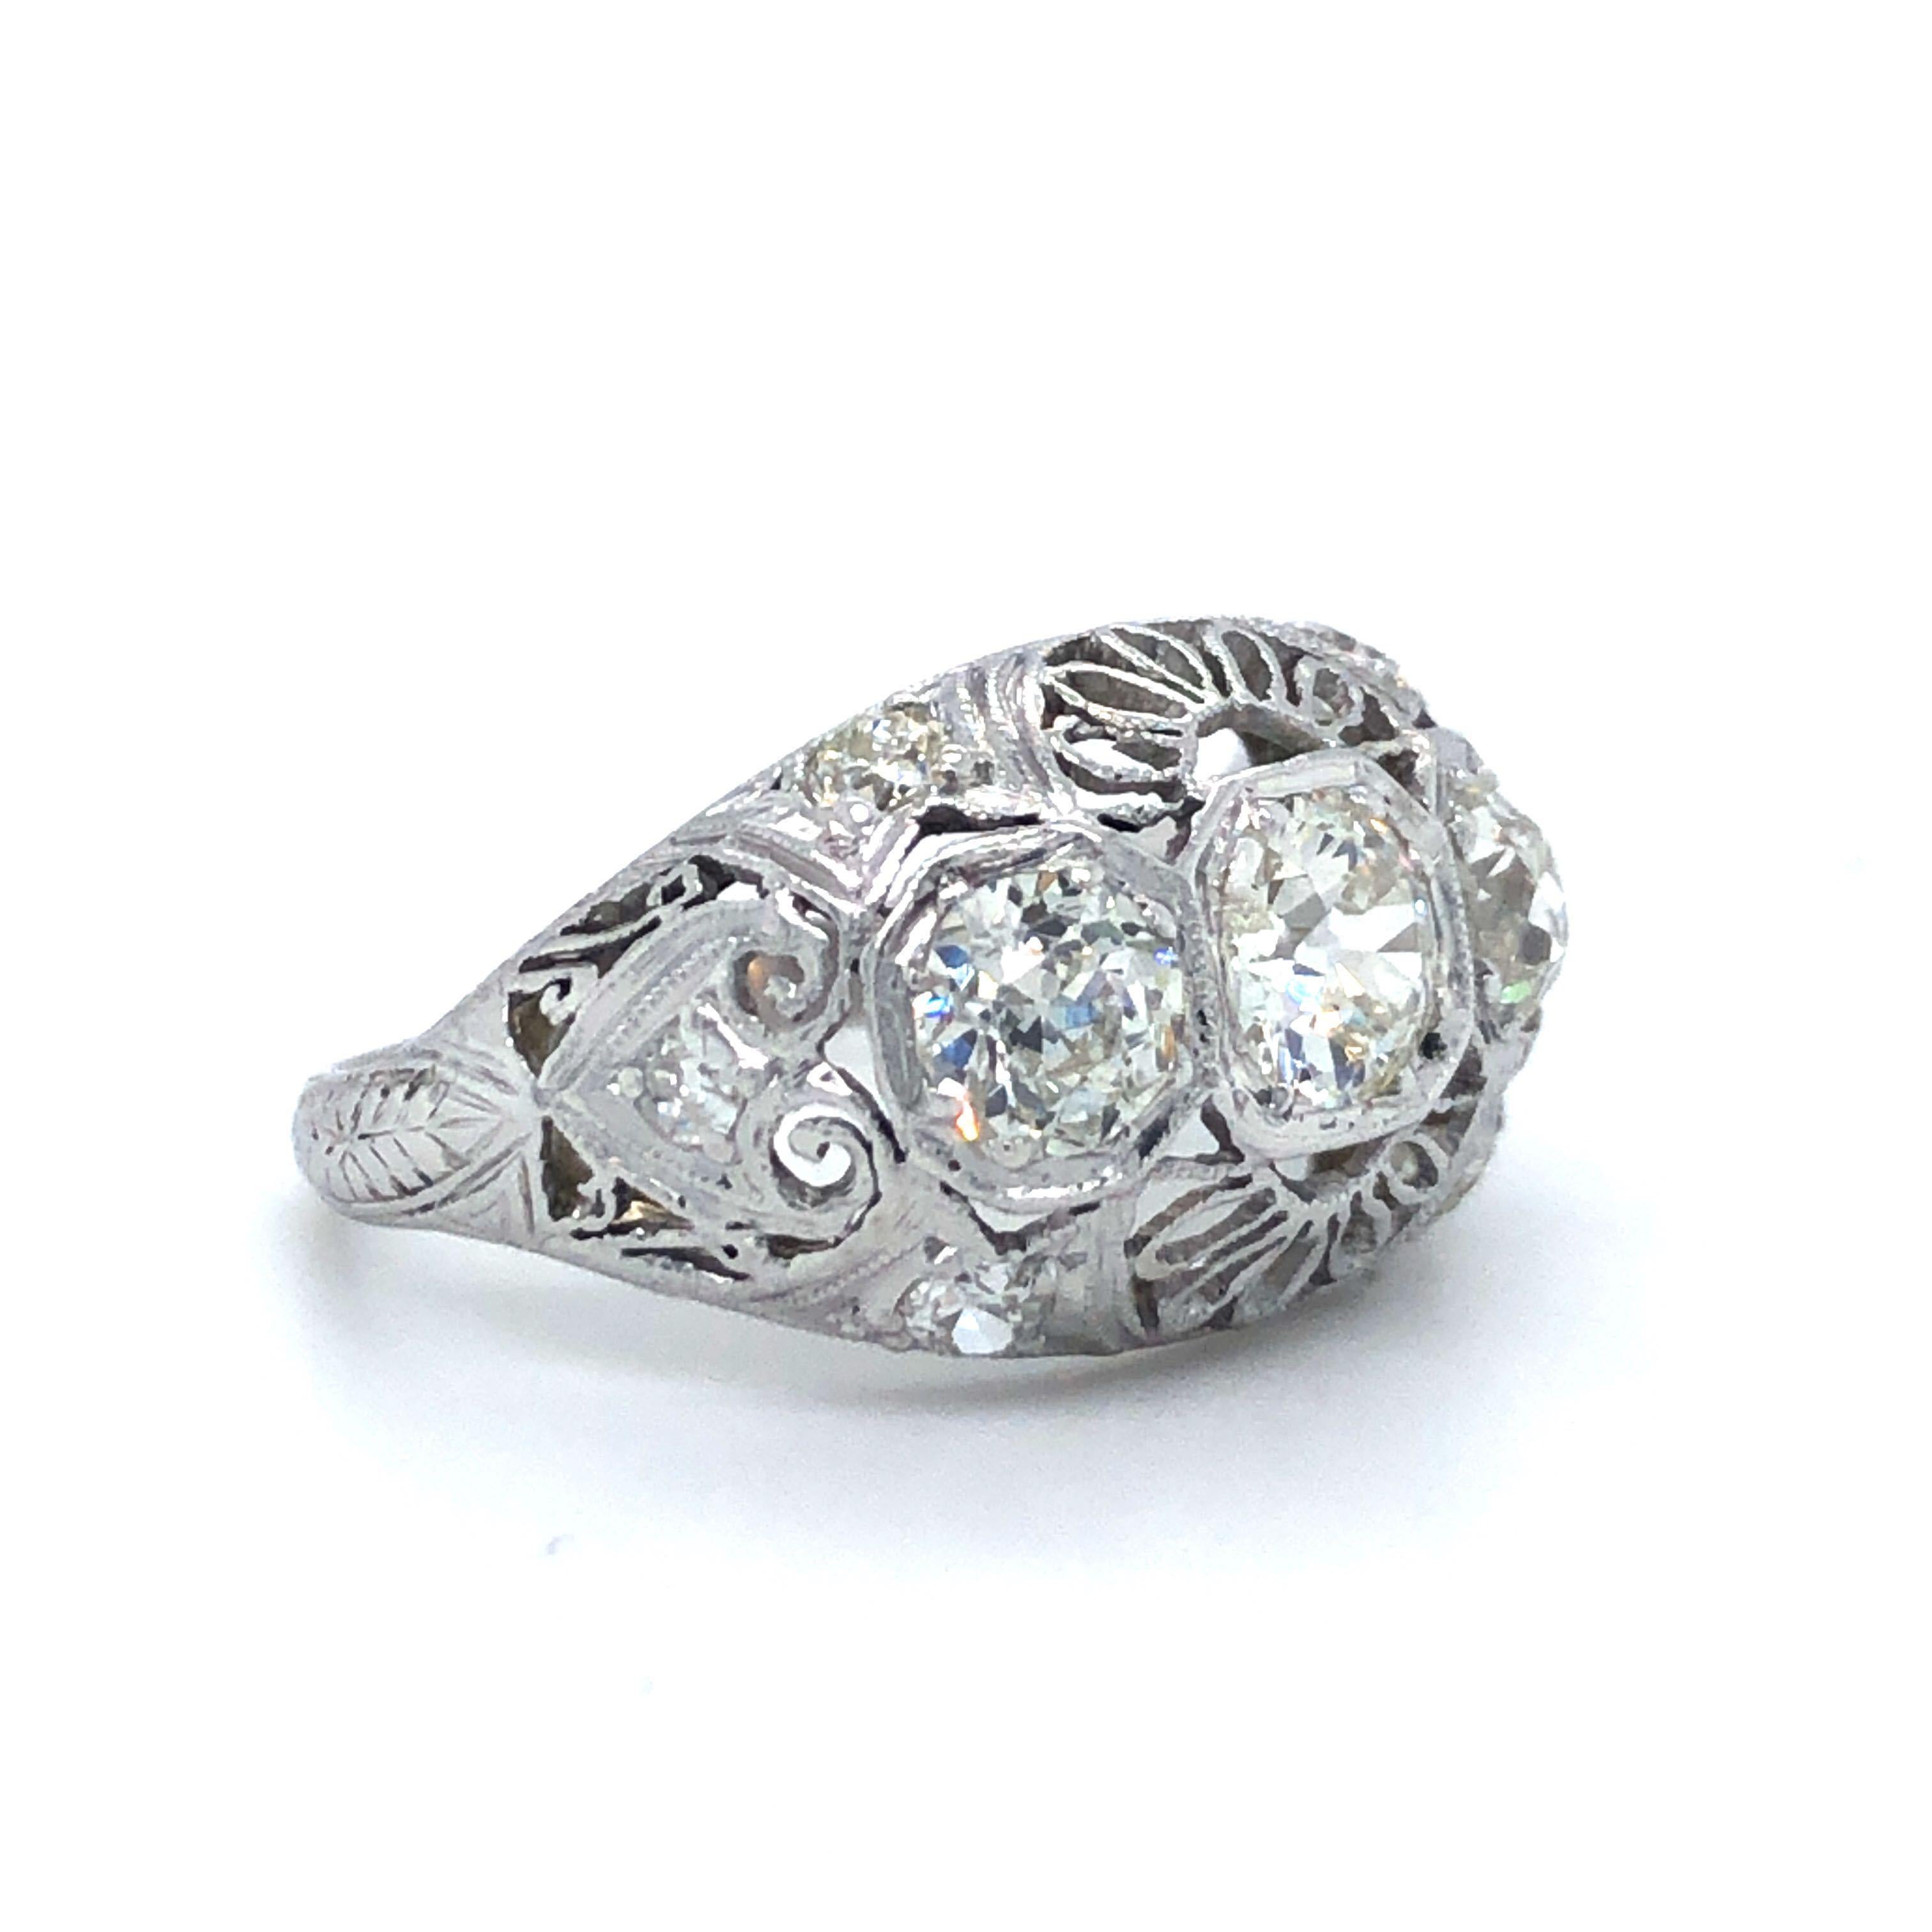 Antique Early 1900s Old Cut Diamond Three-Stone Filigree Ring Platinum 3